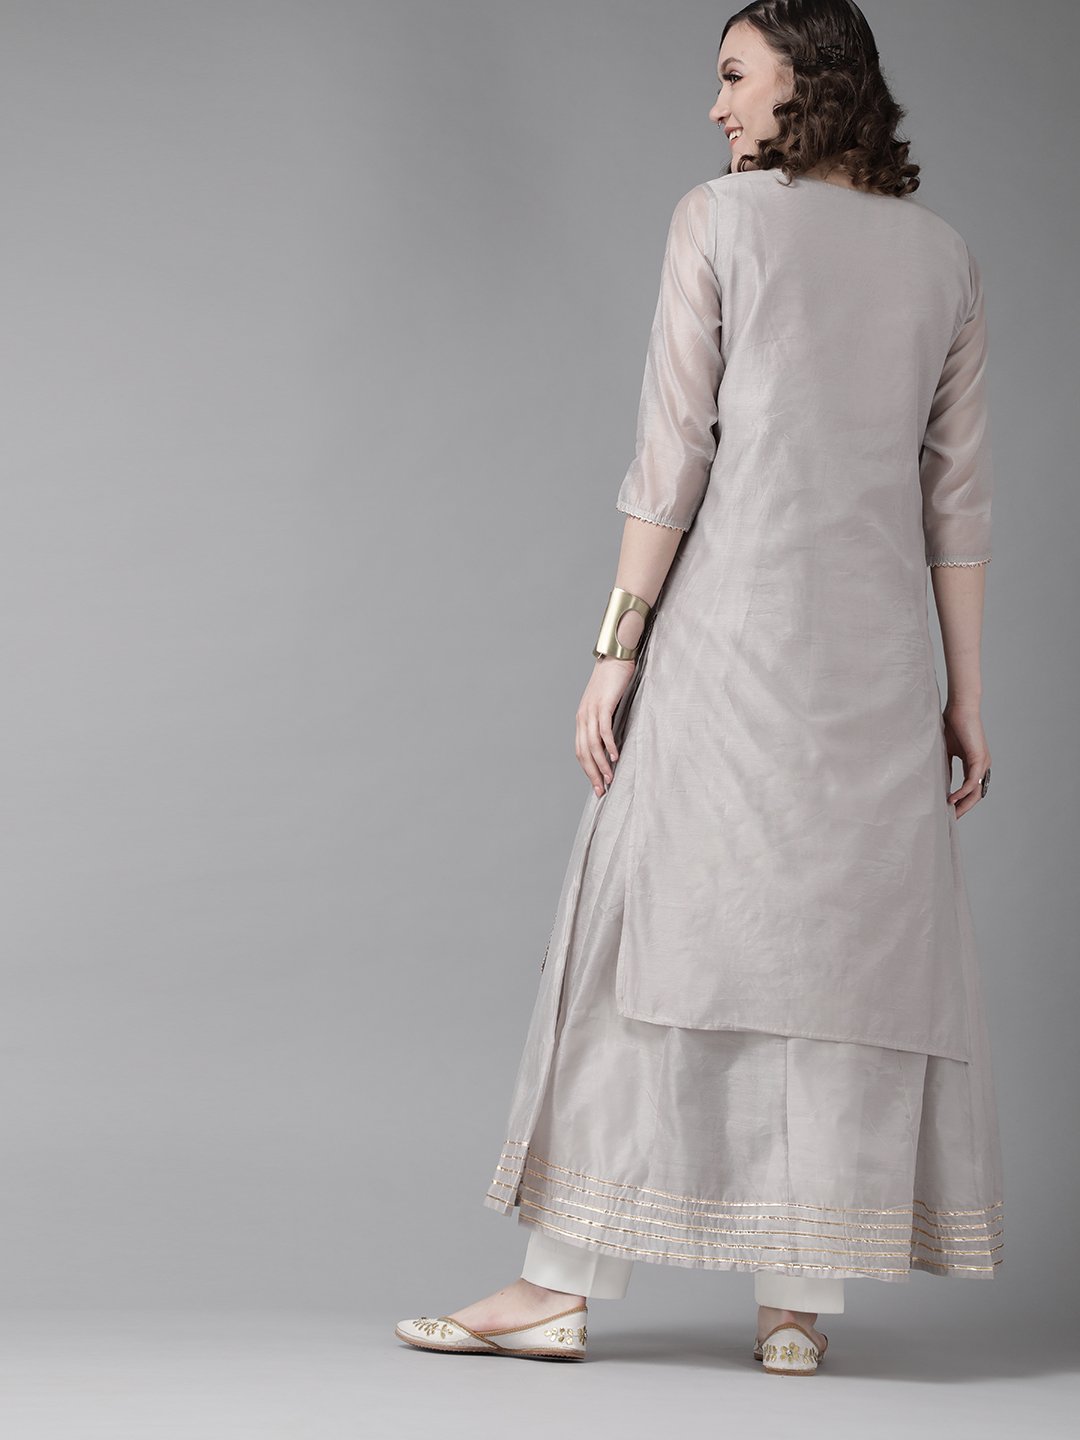 Ishin Women's Grey Embroidered Layered Anarkali Kurta